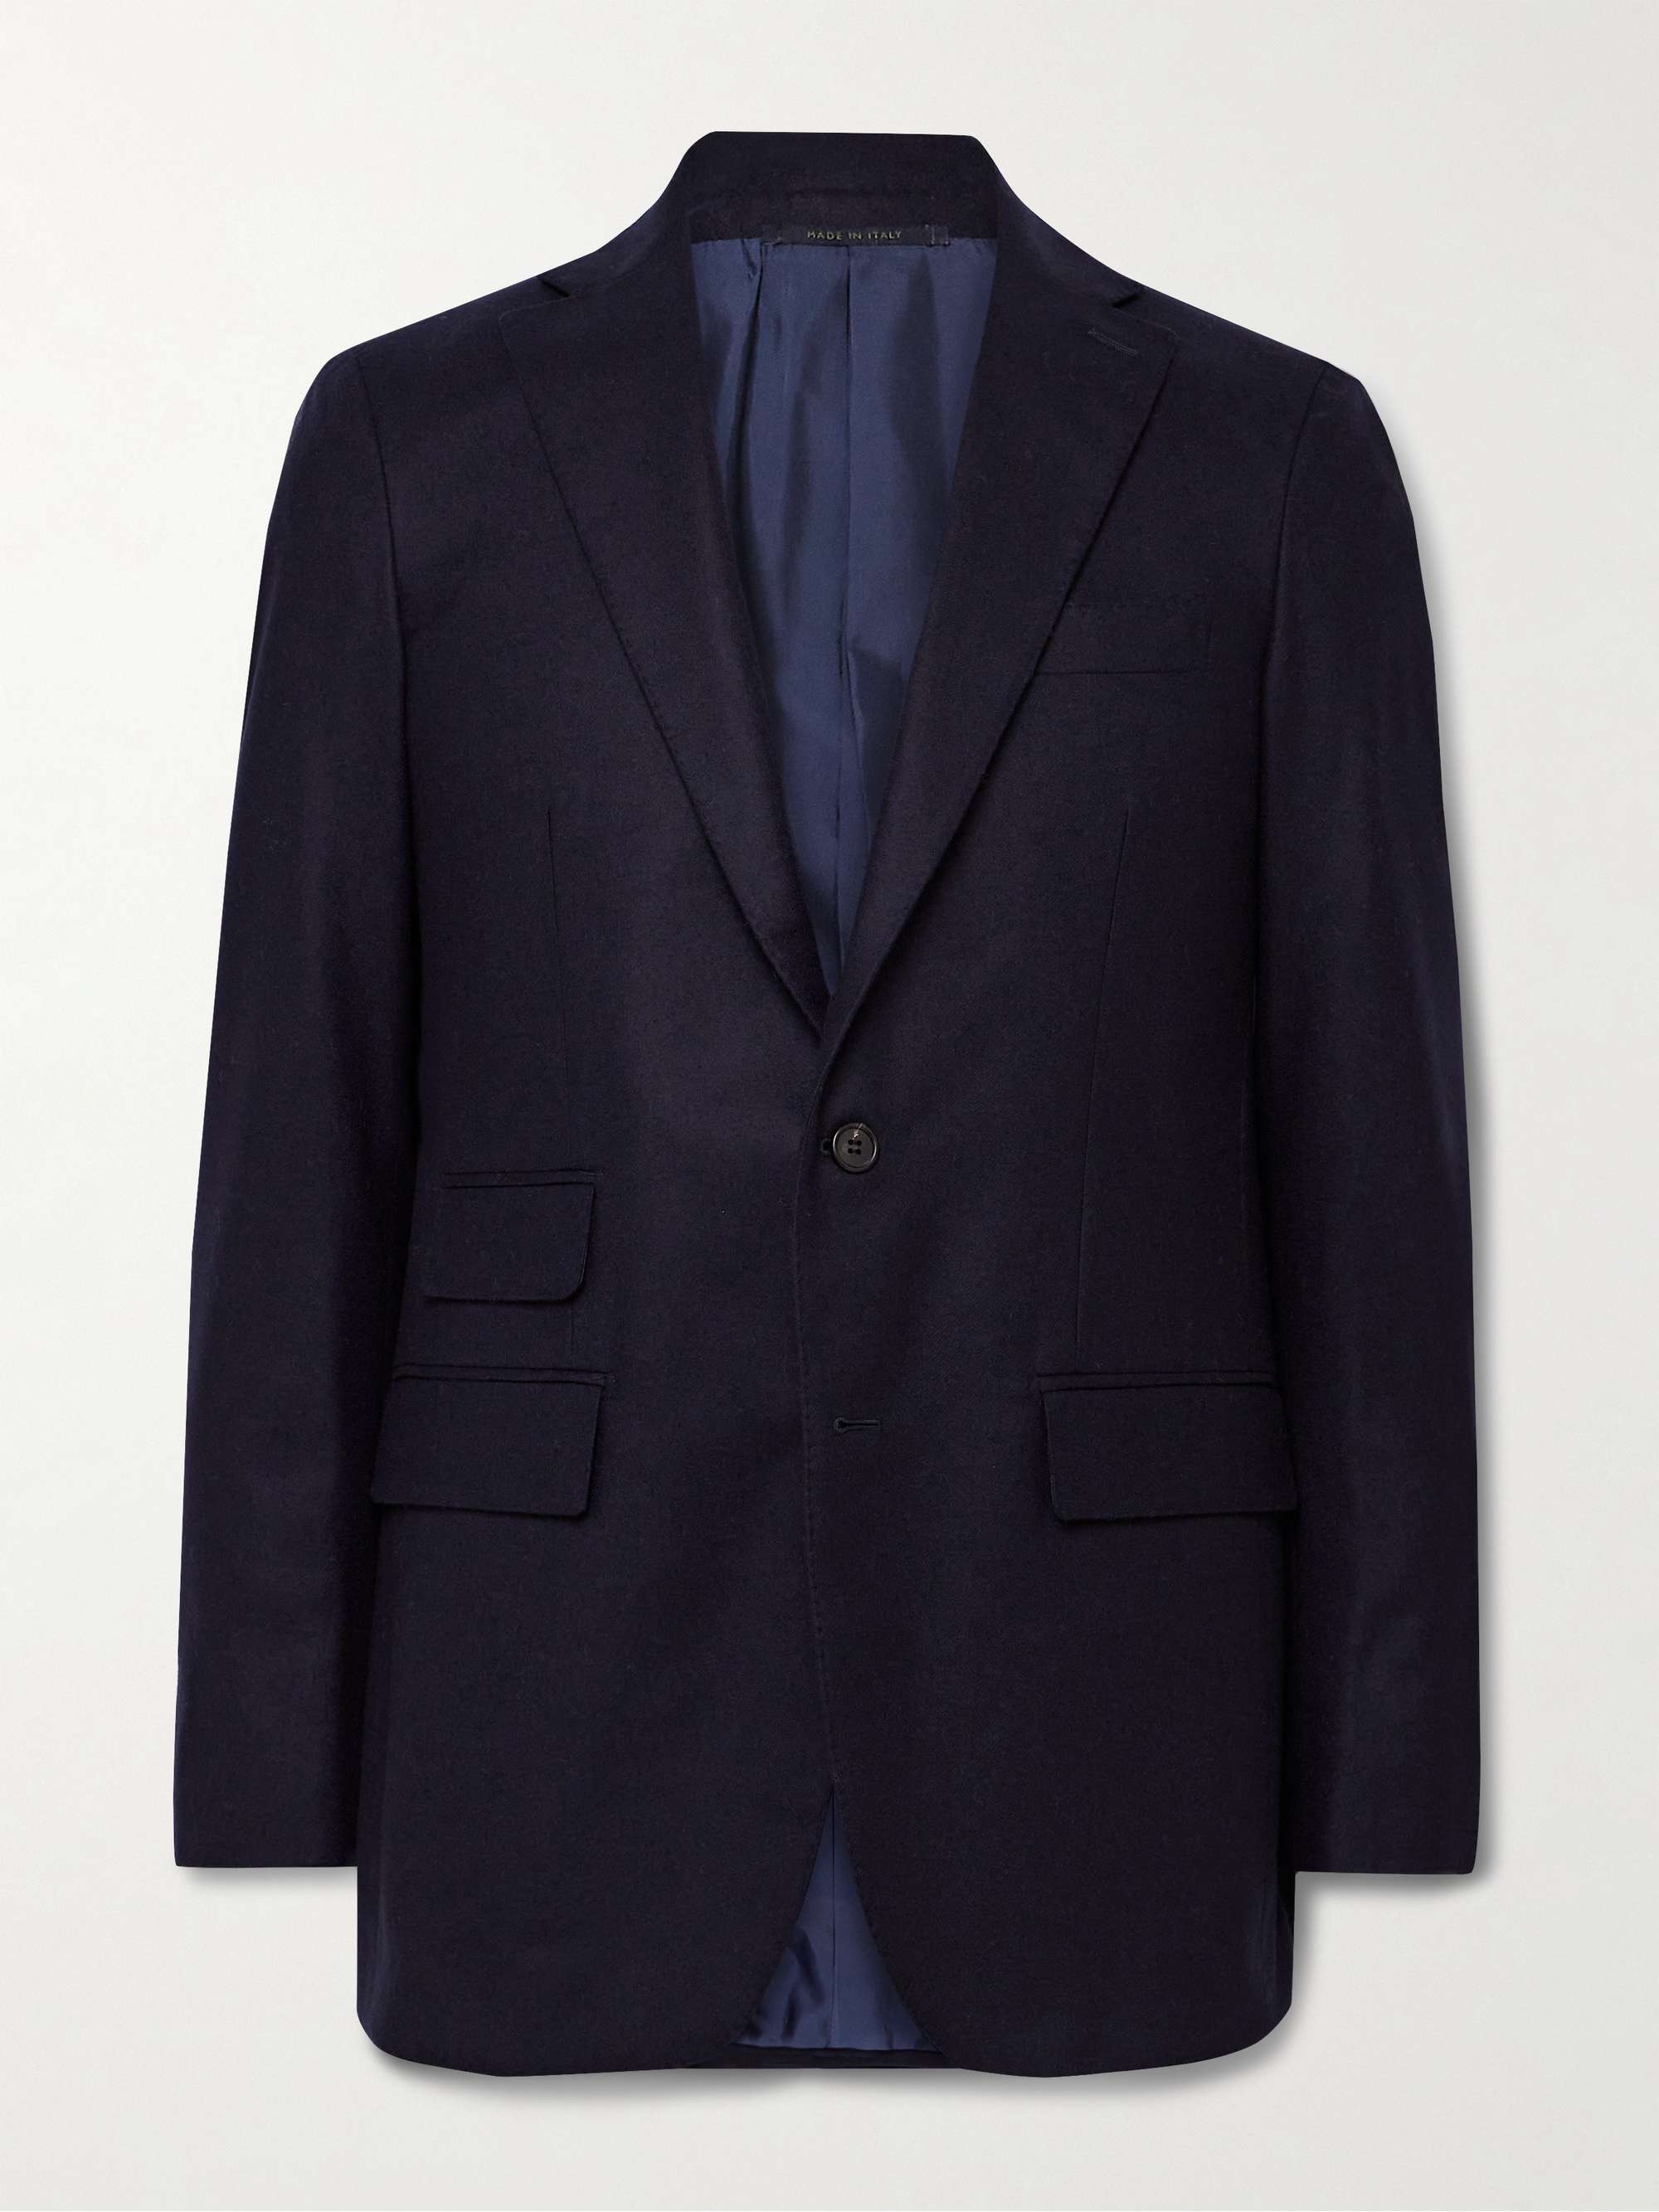 SID MASHBURN Kincaid No. 3 Virgin Wool-Flannel Suit Jacket for Men | MR ...